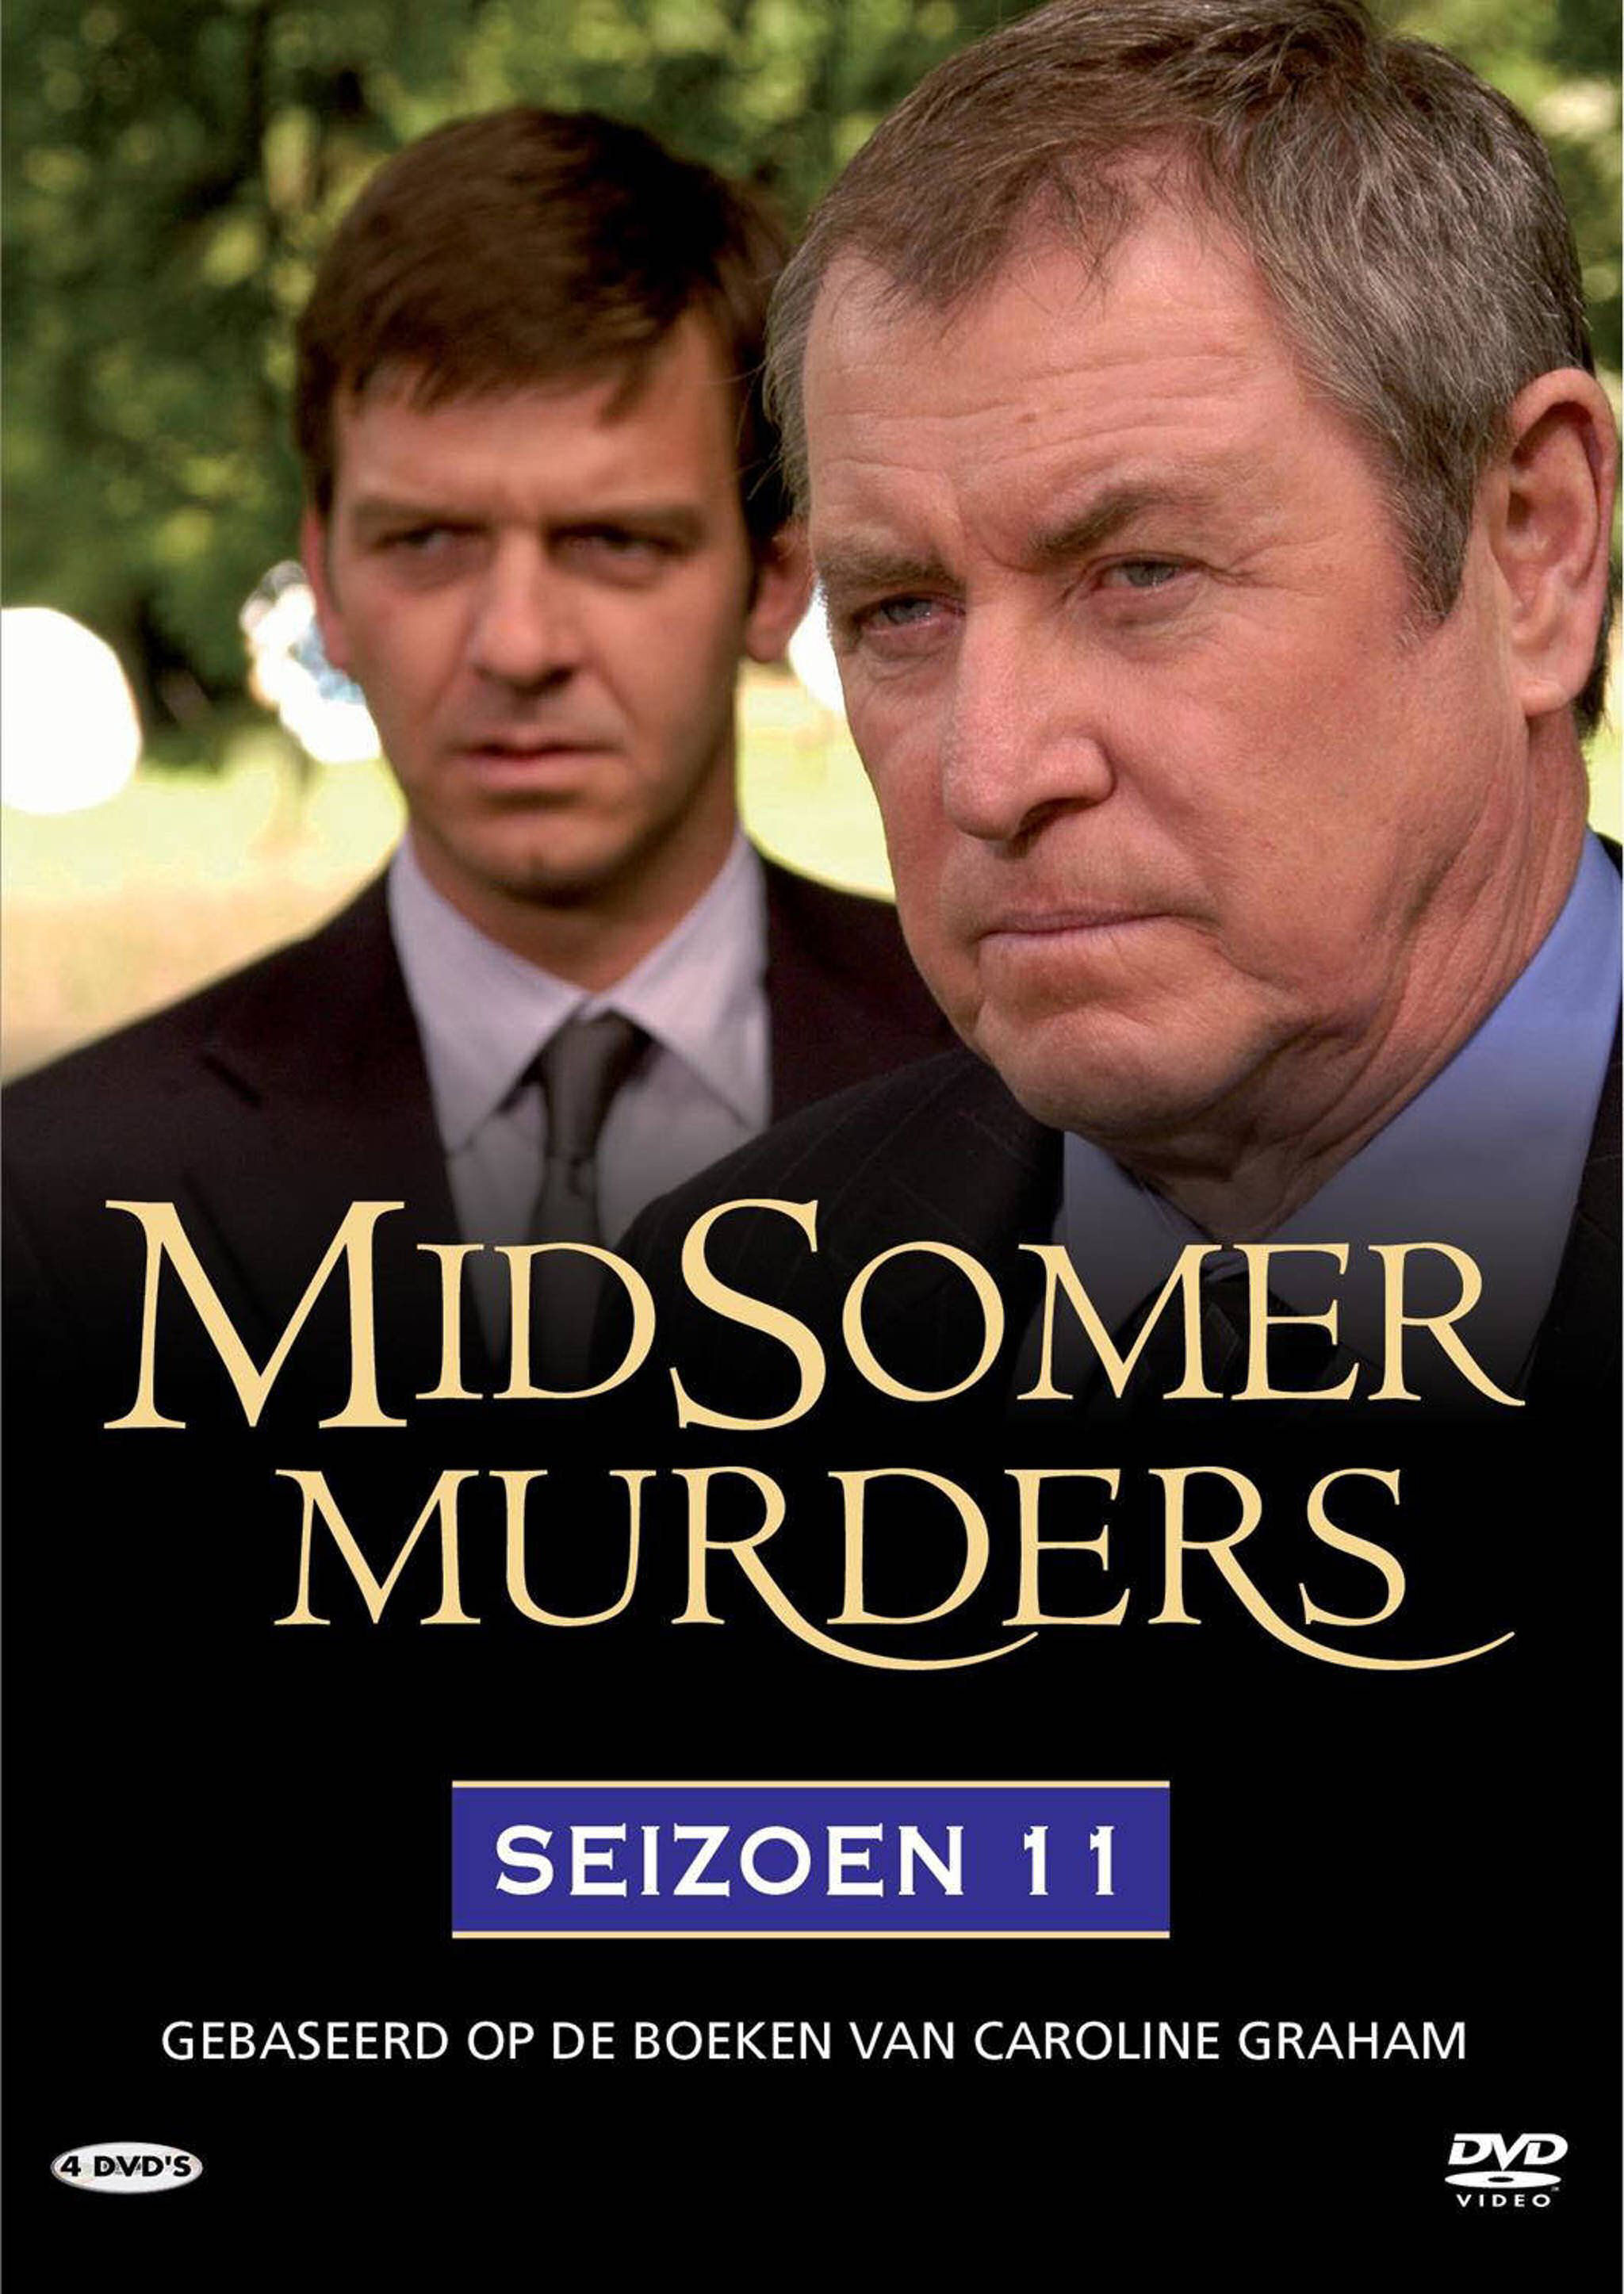 REPOST Midsomer Murders Seizoen 11 - DvD 3